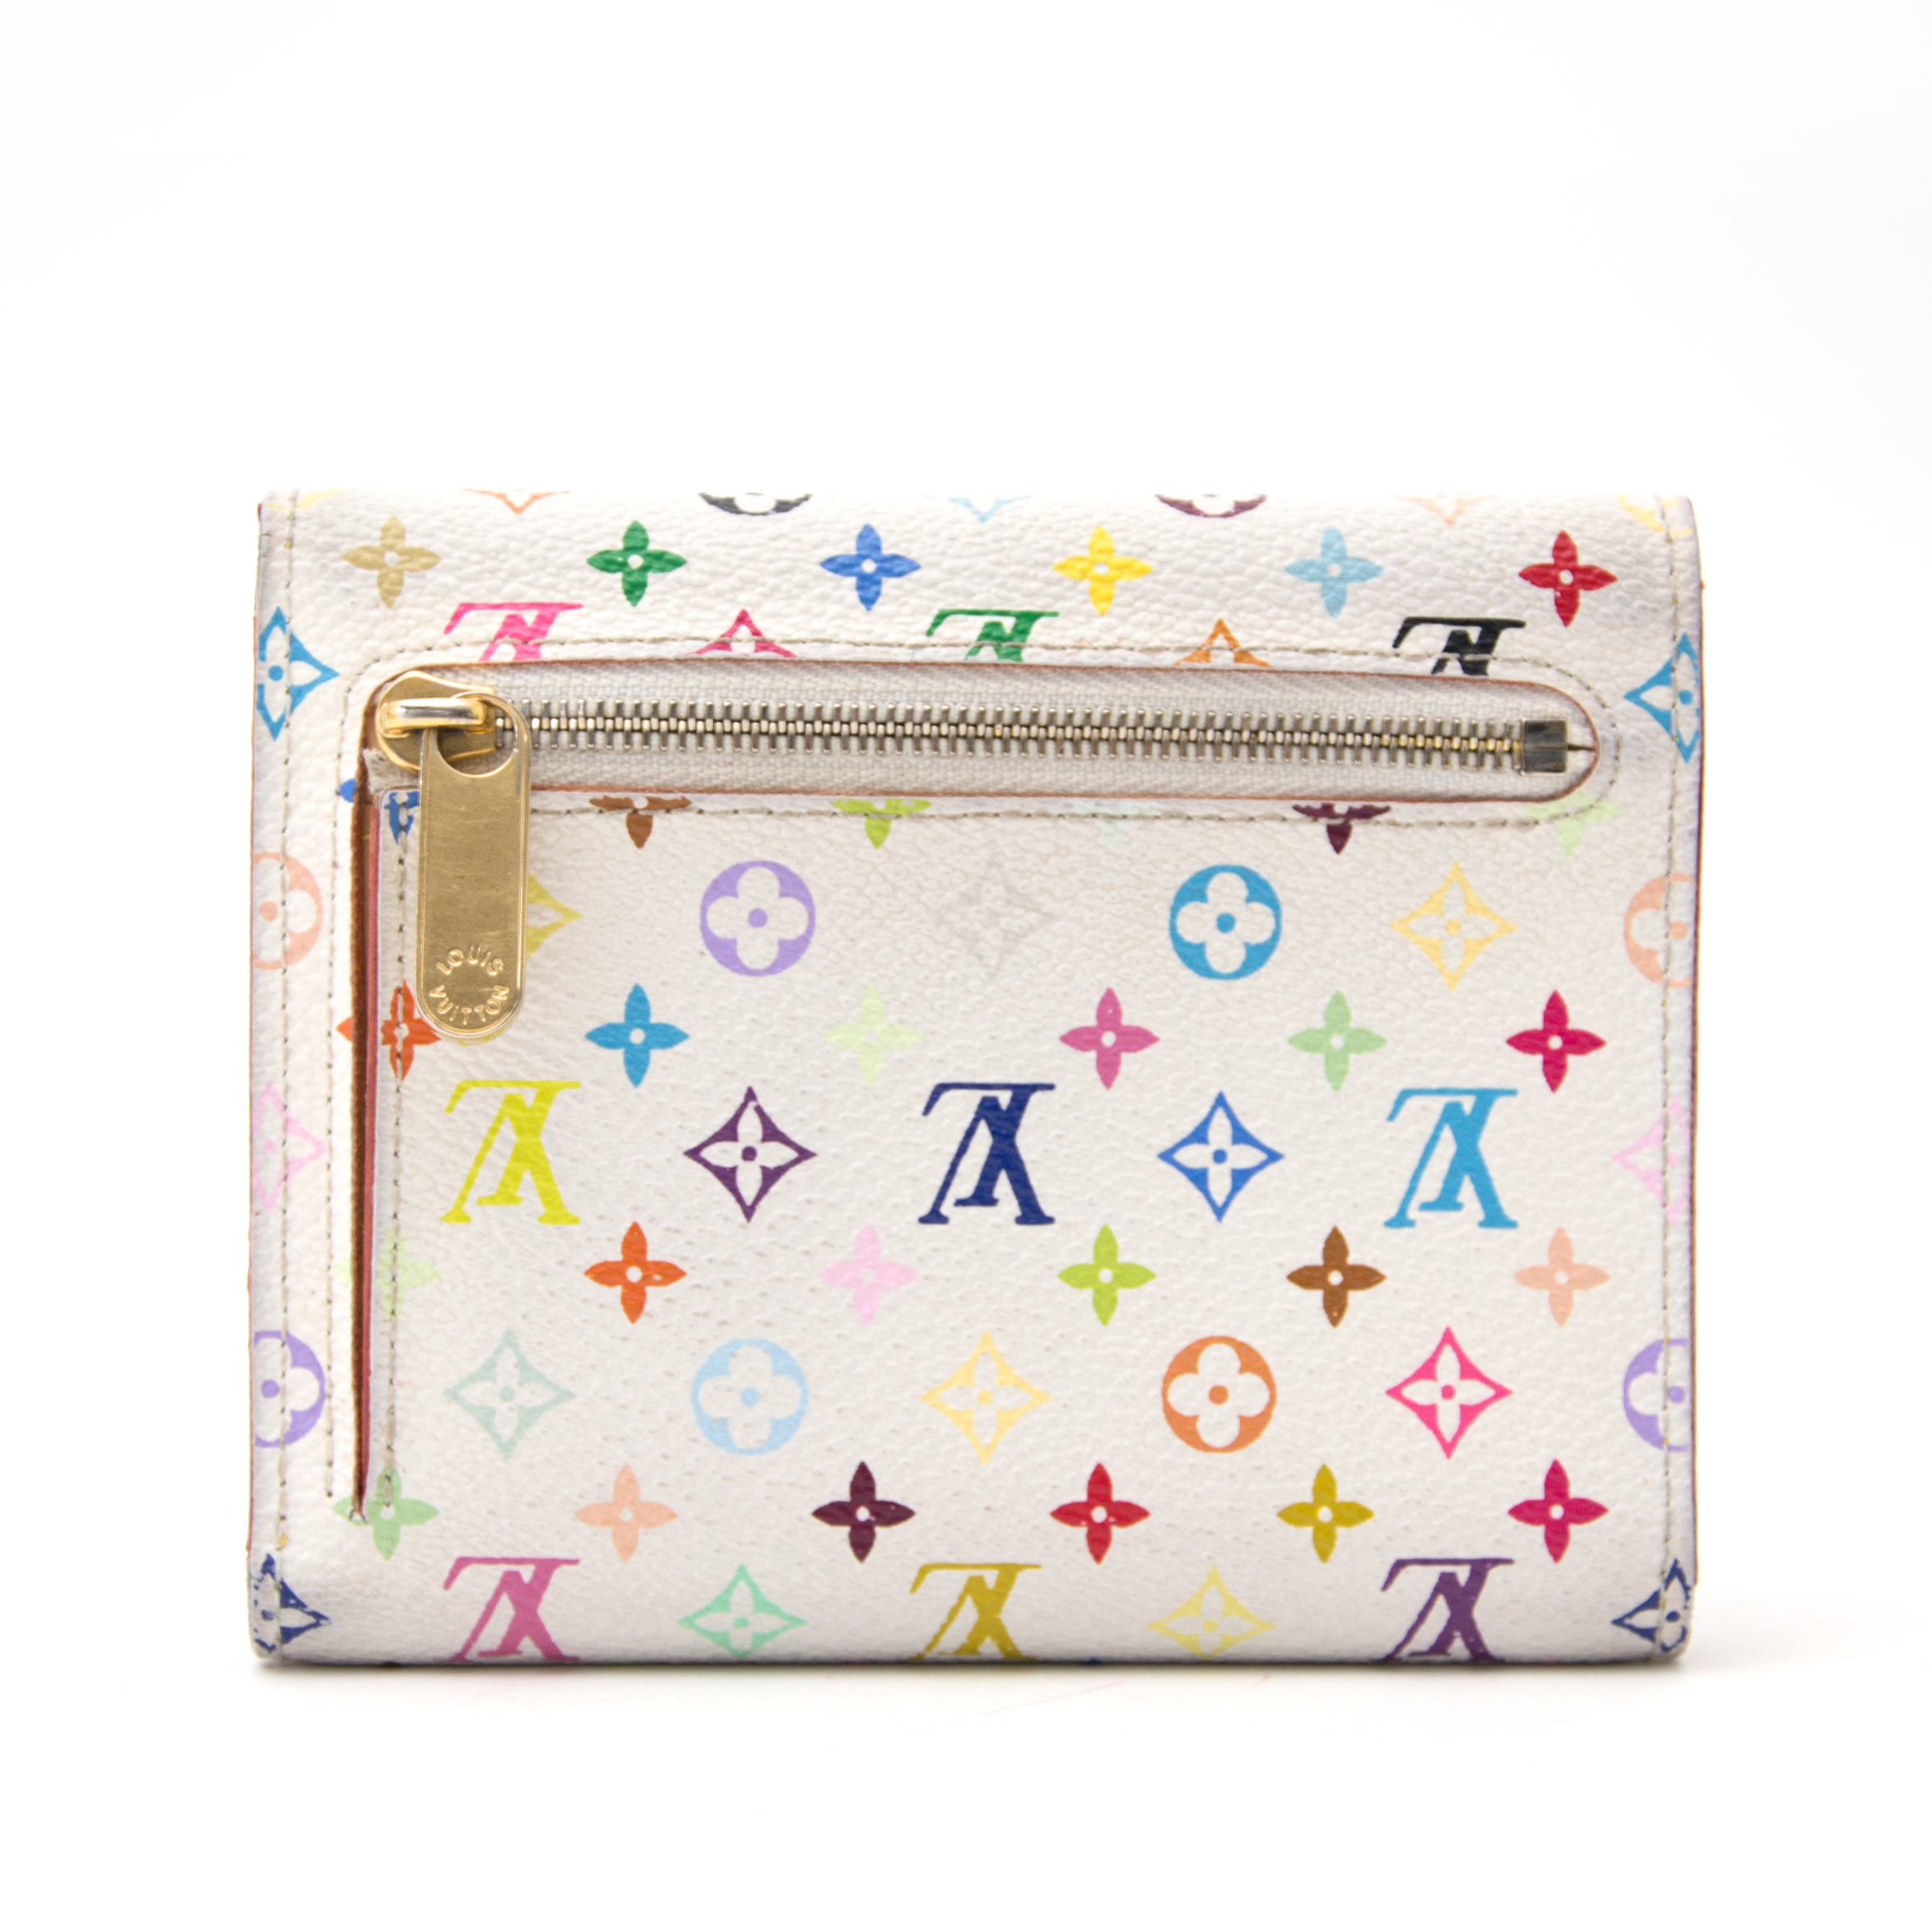 Shop Safe Online: 100% authentic vintage luxury designer handbags ...